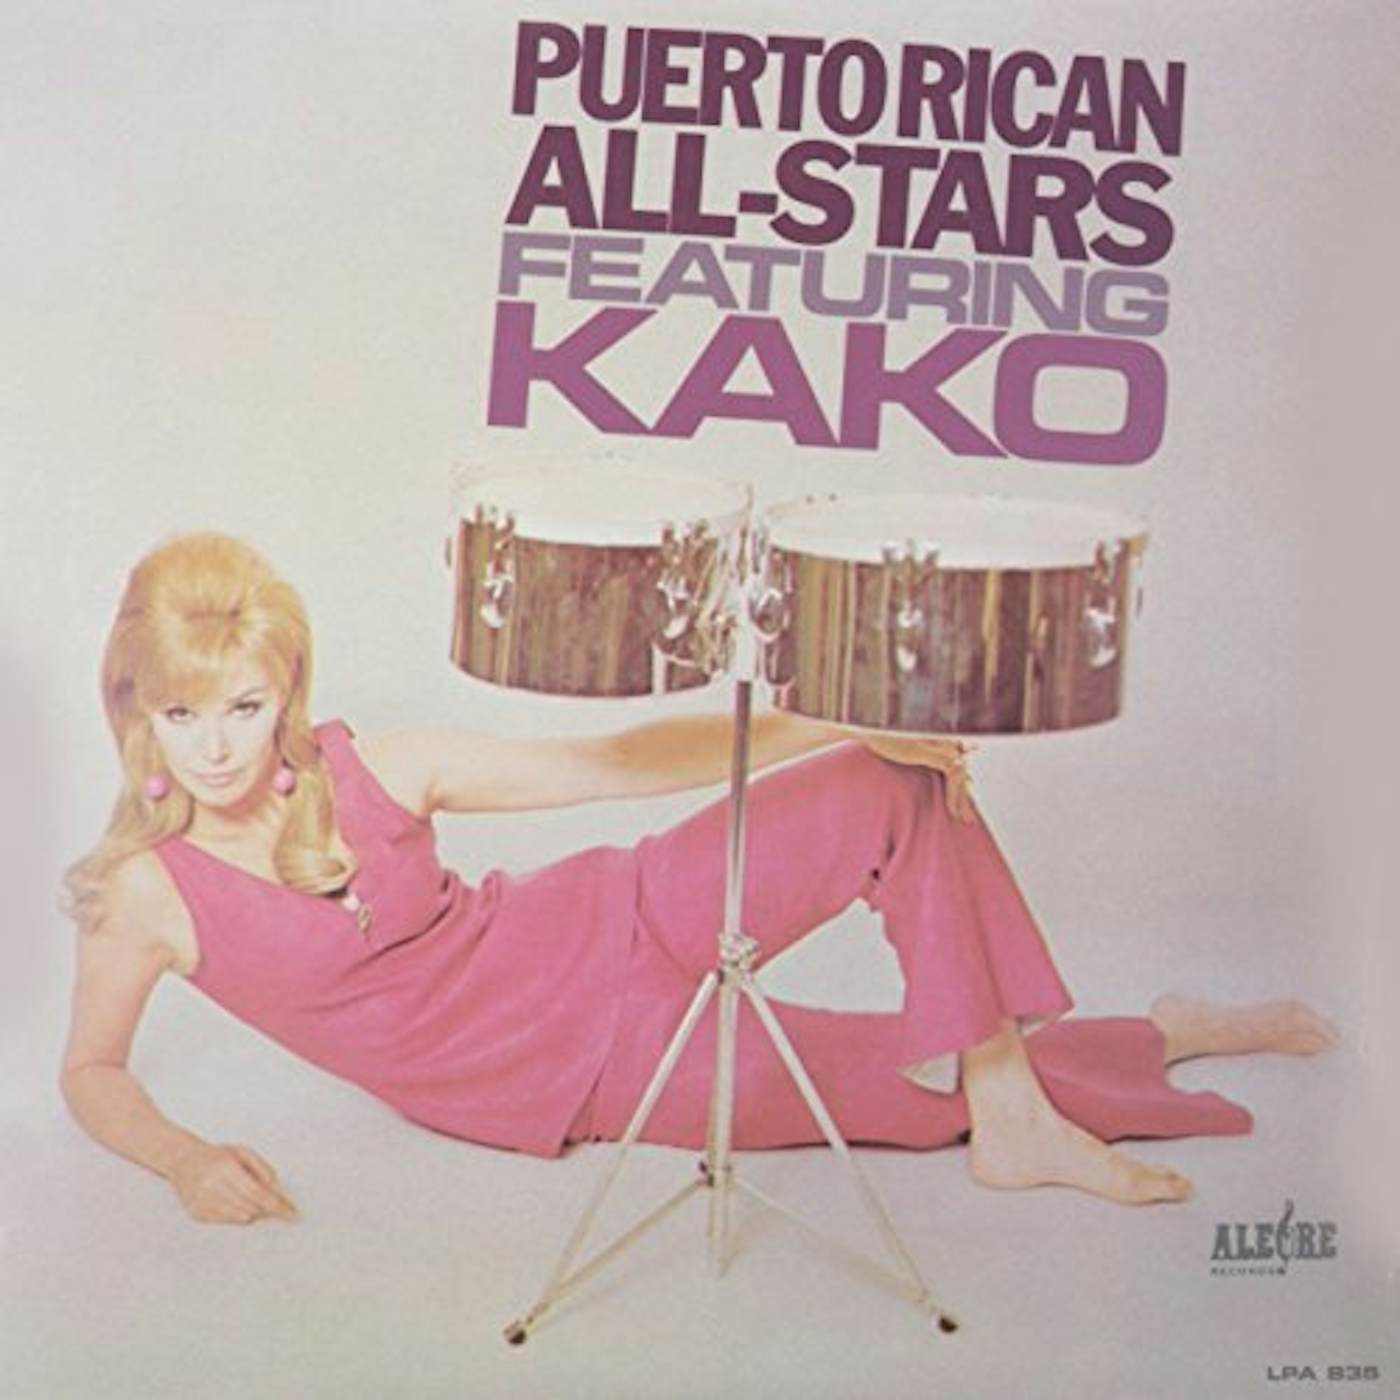 Kako PUERTO RICAN ALL-STARS Vinyl Record